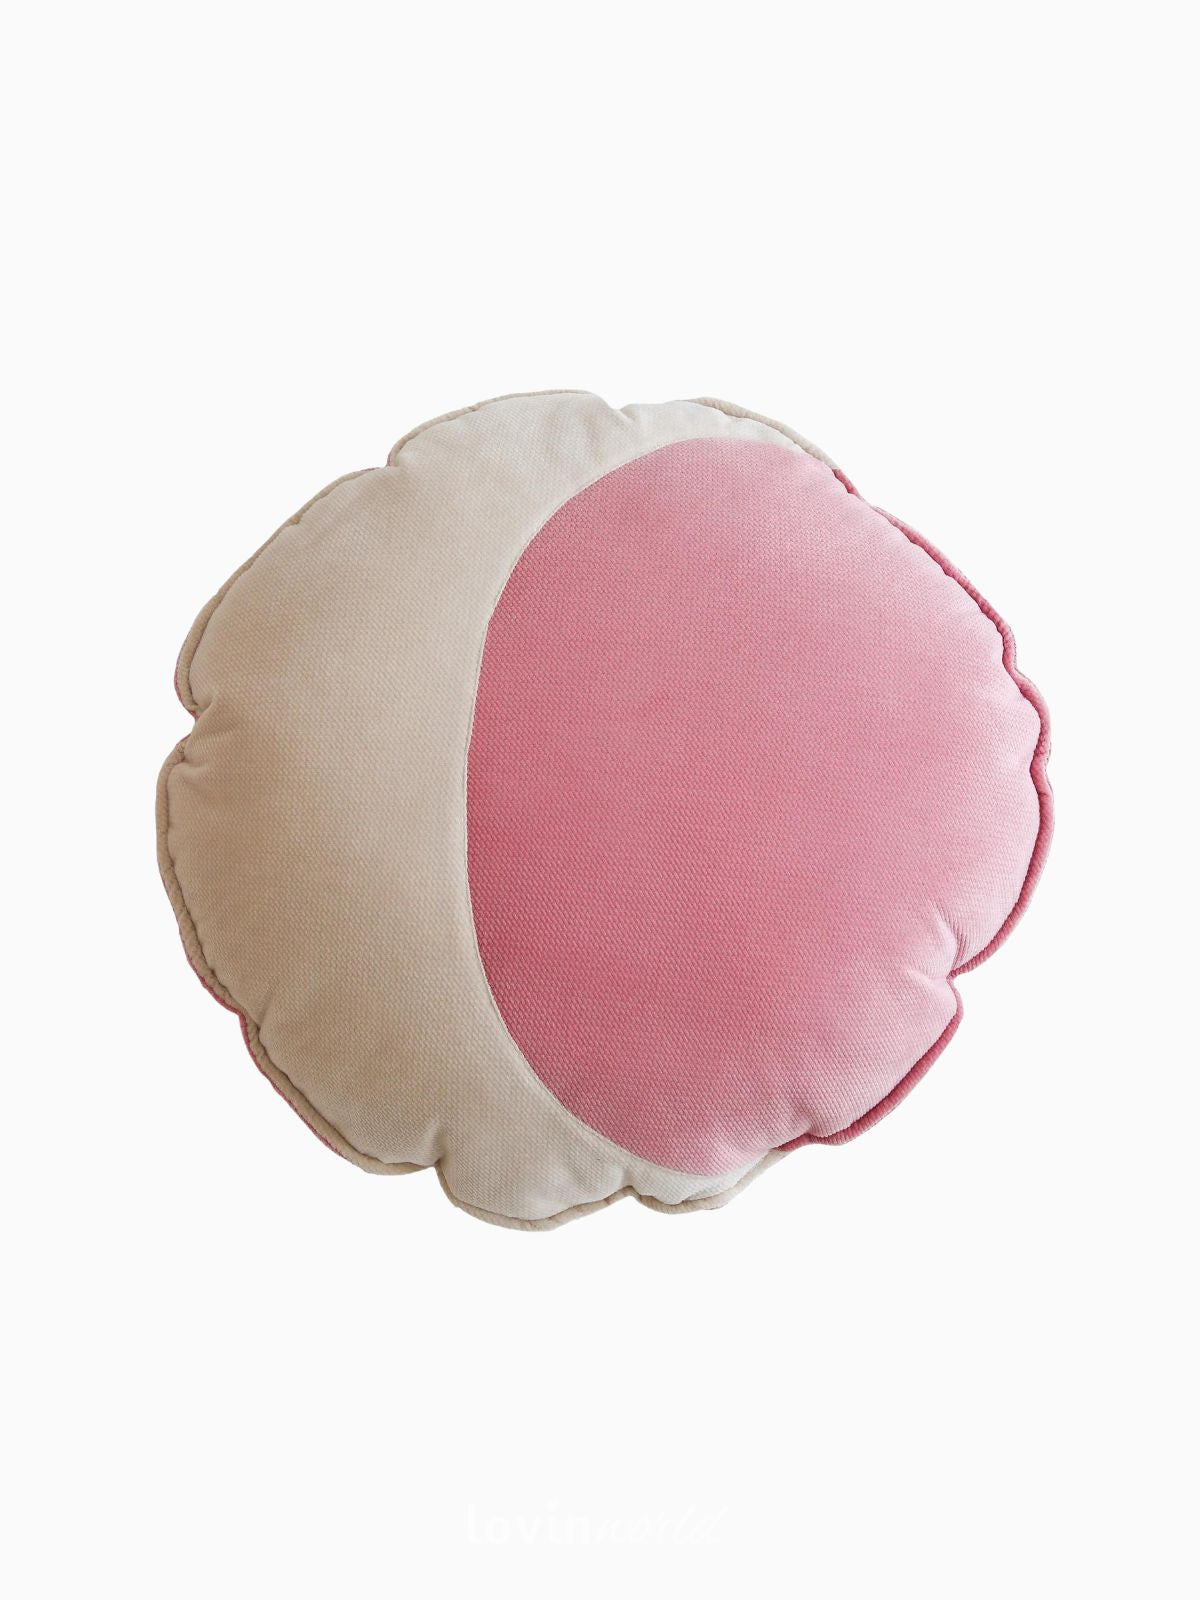 Cuscino Luna 100% velluto in colore rosa e beige 39x39 cm.-1